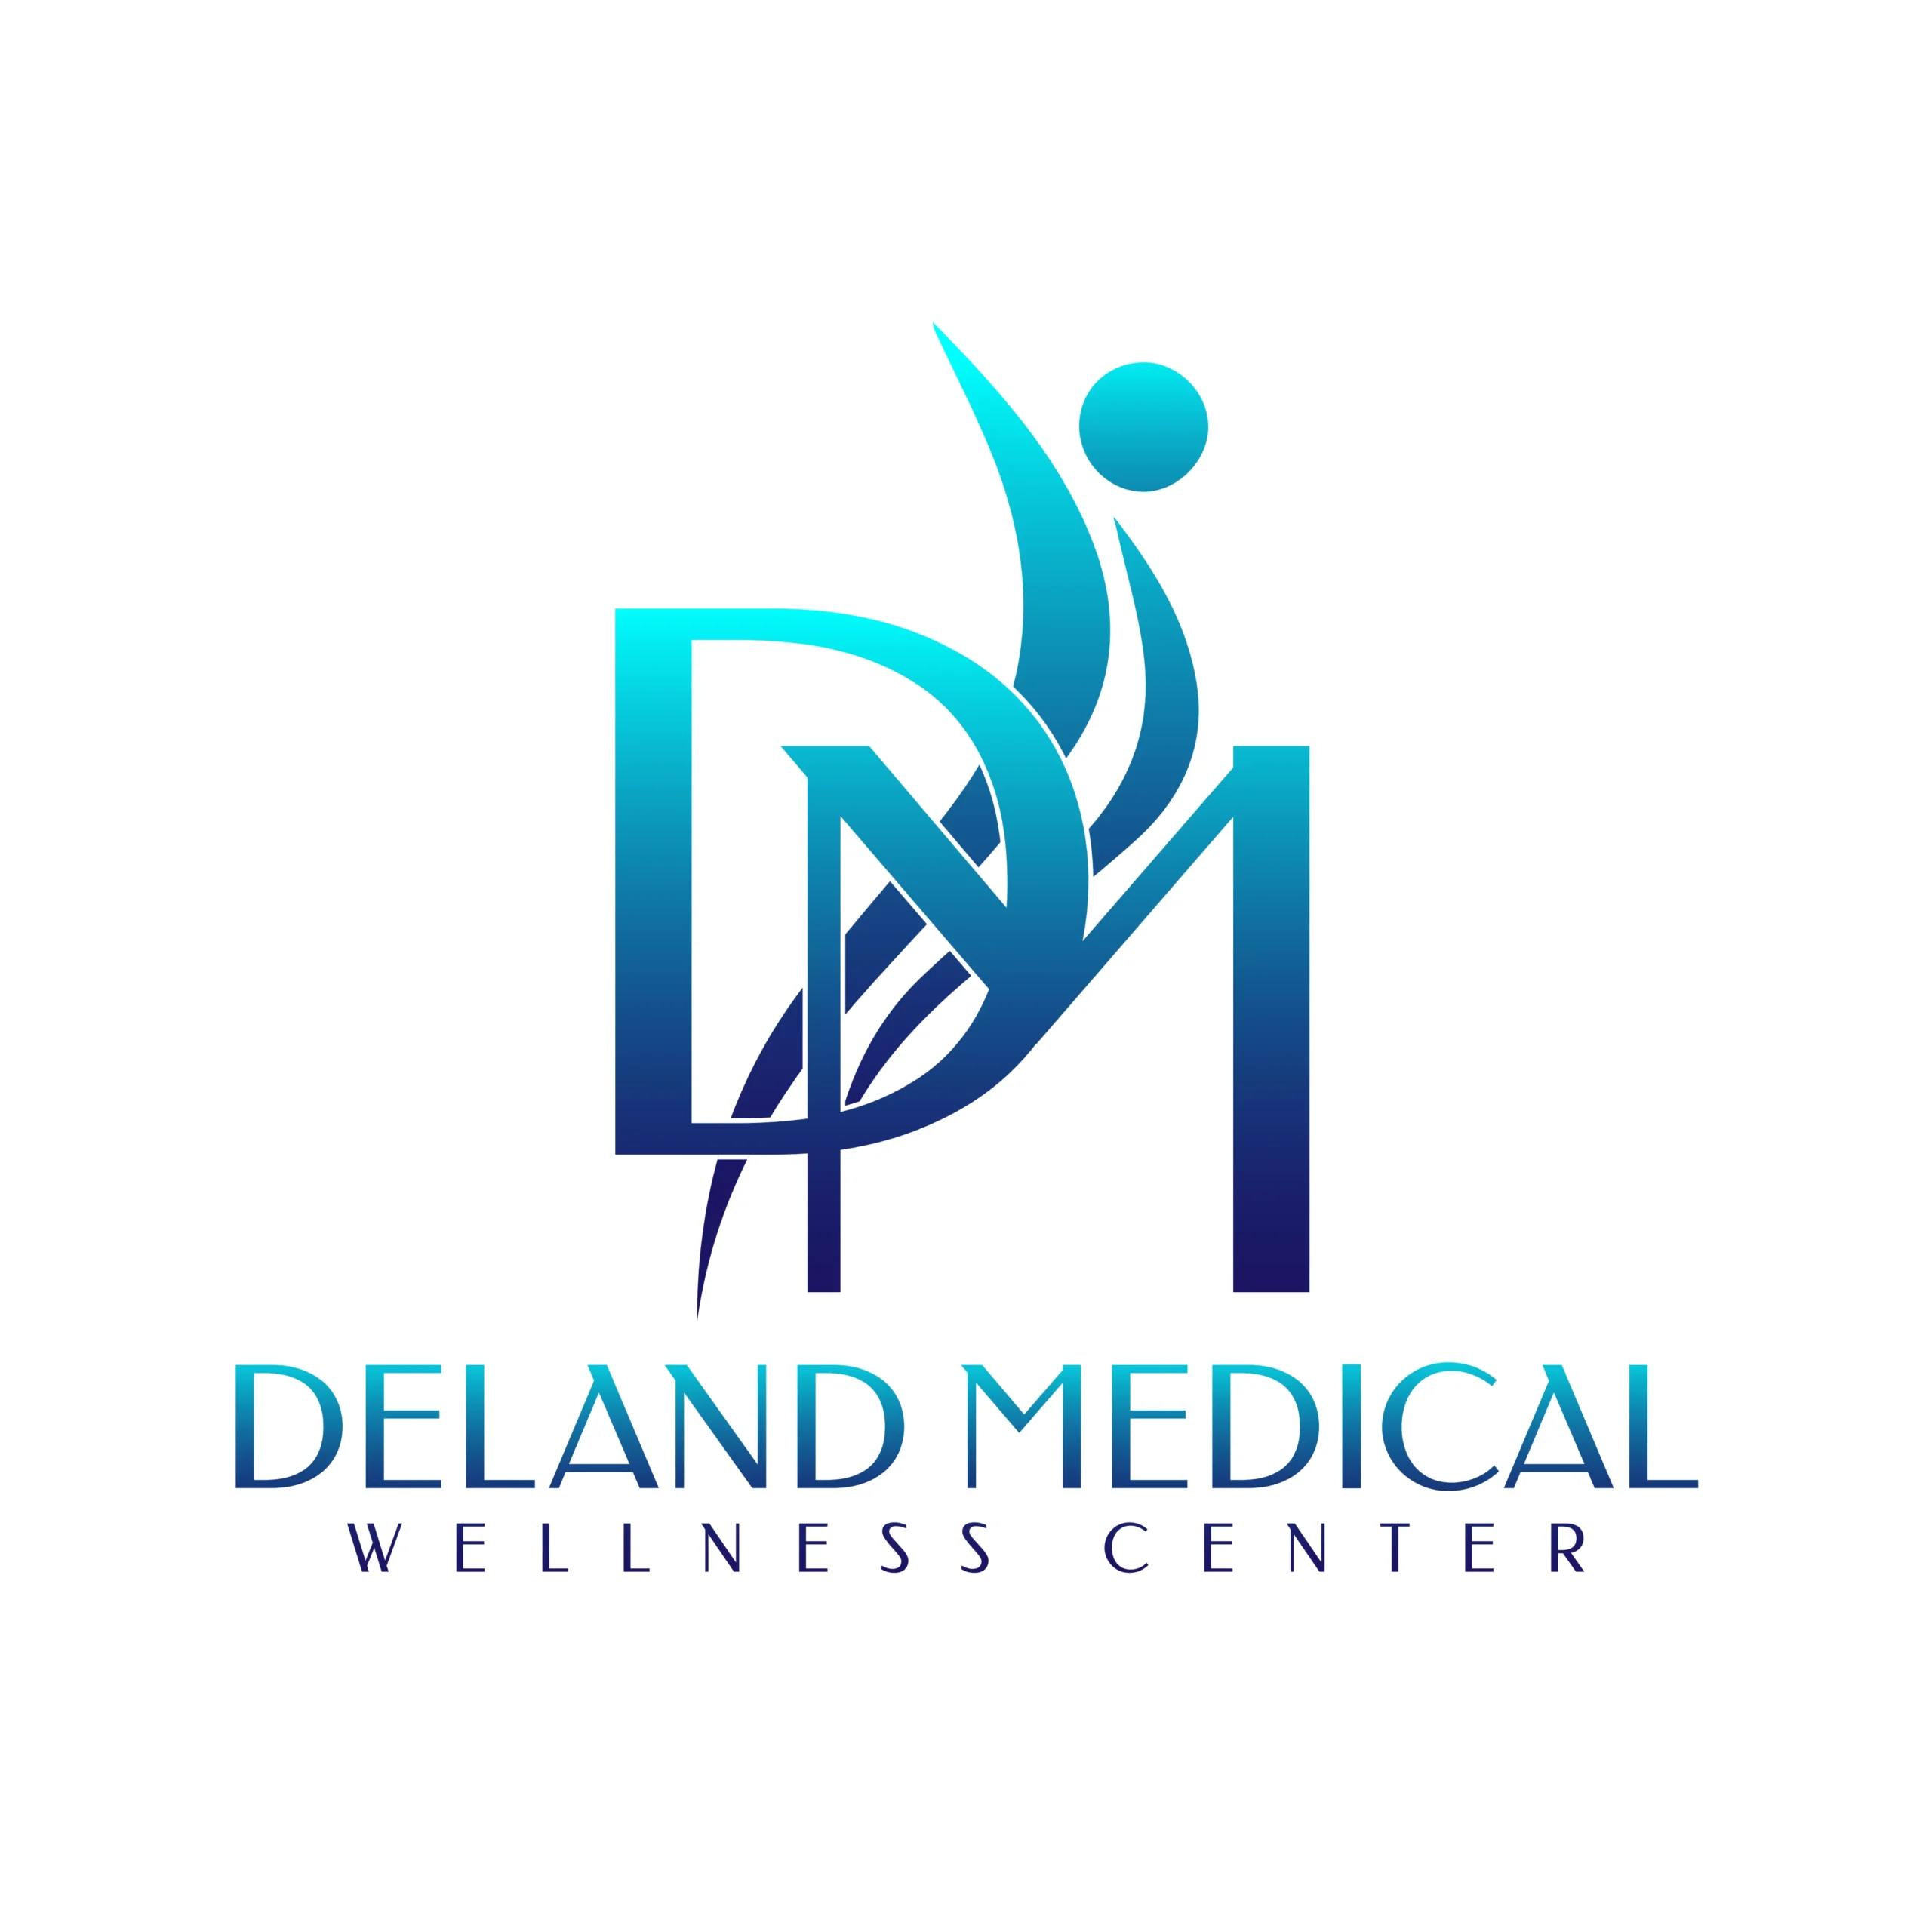 Deland Medical Wellness